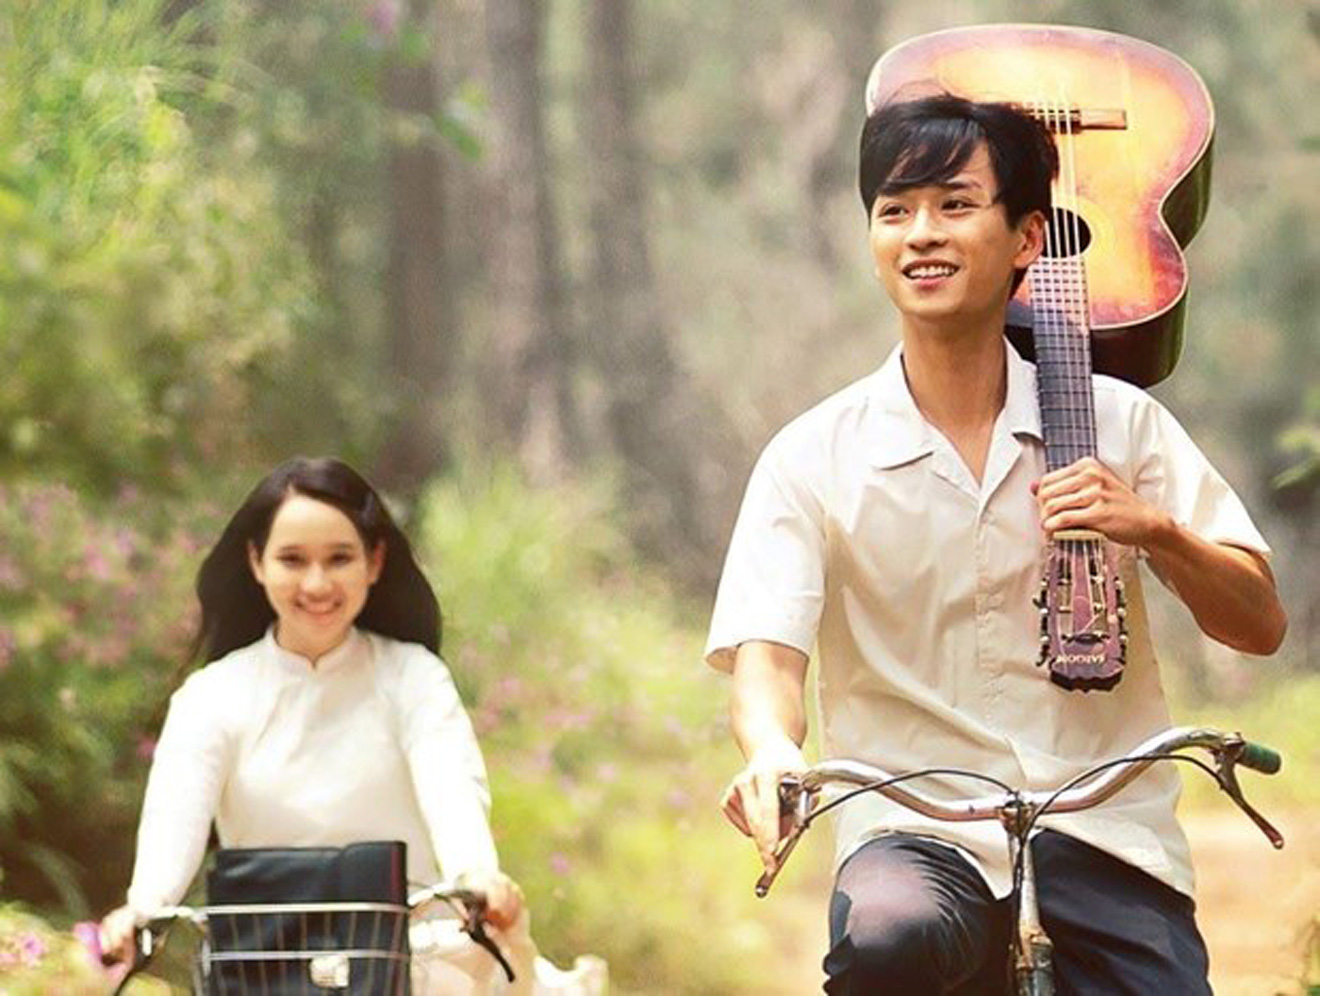 Tuần lễ phim ASEAN, phim ASEAN, Mắt biếc